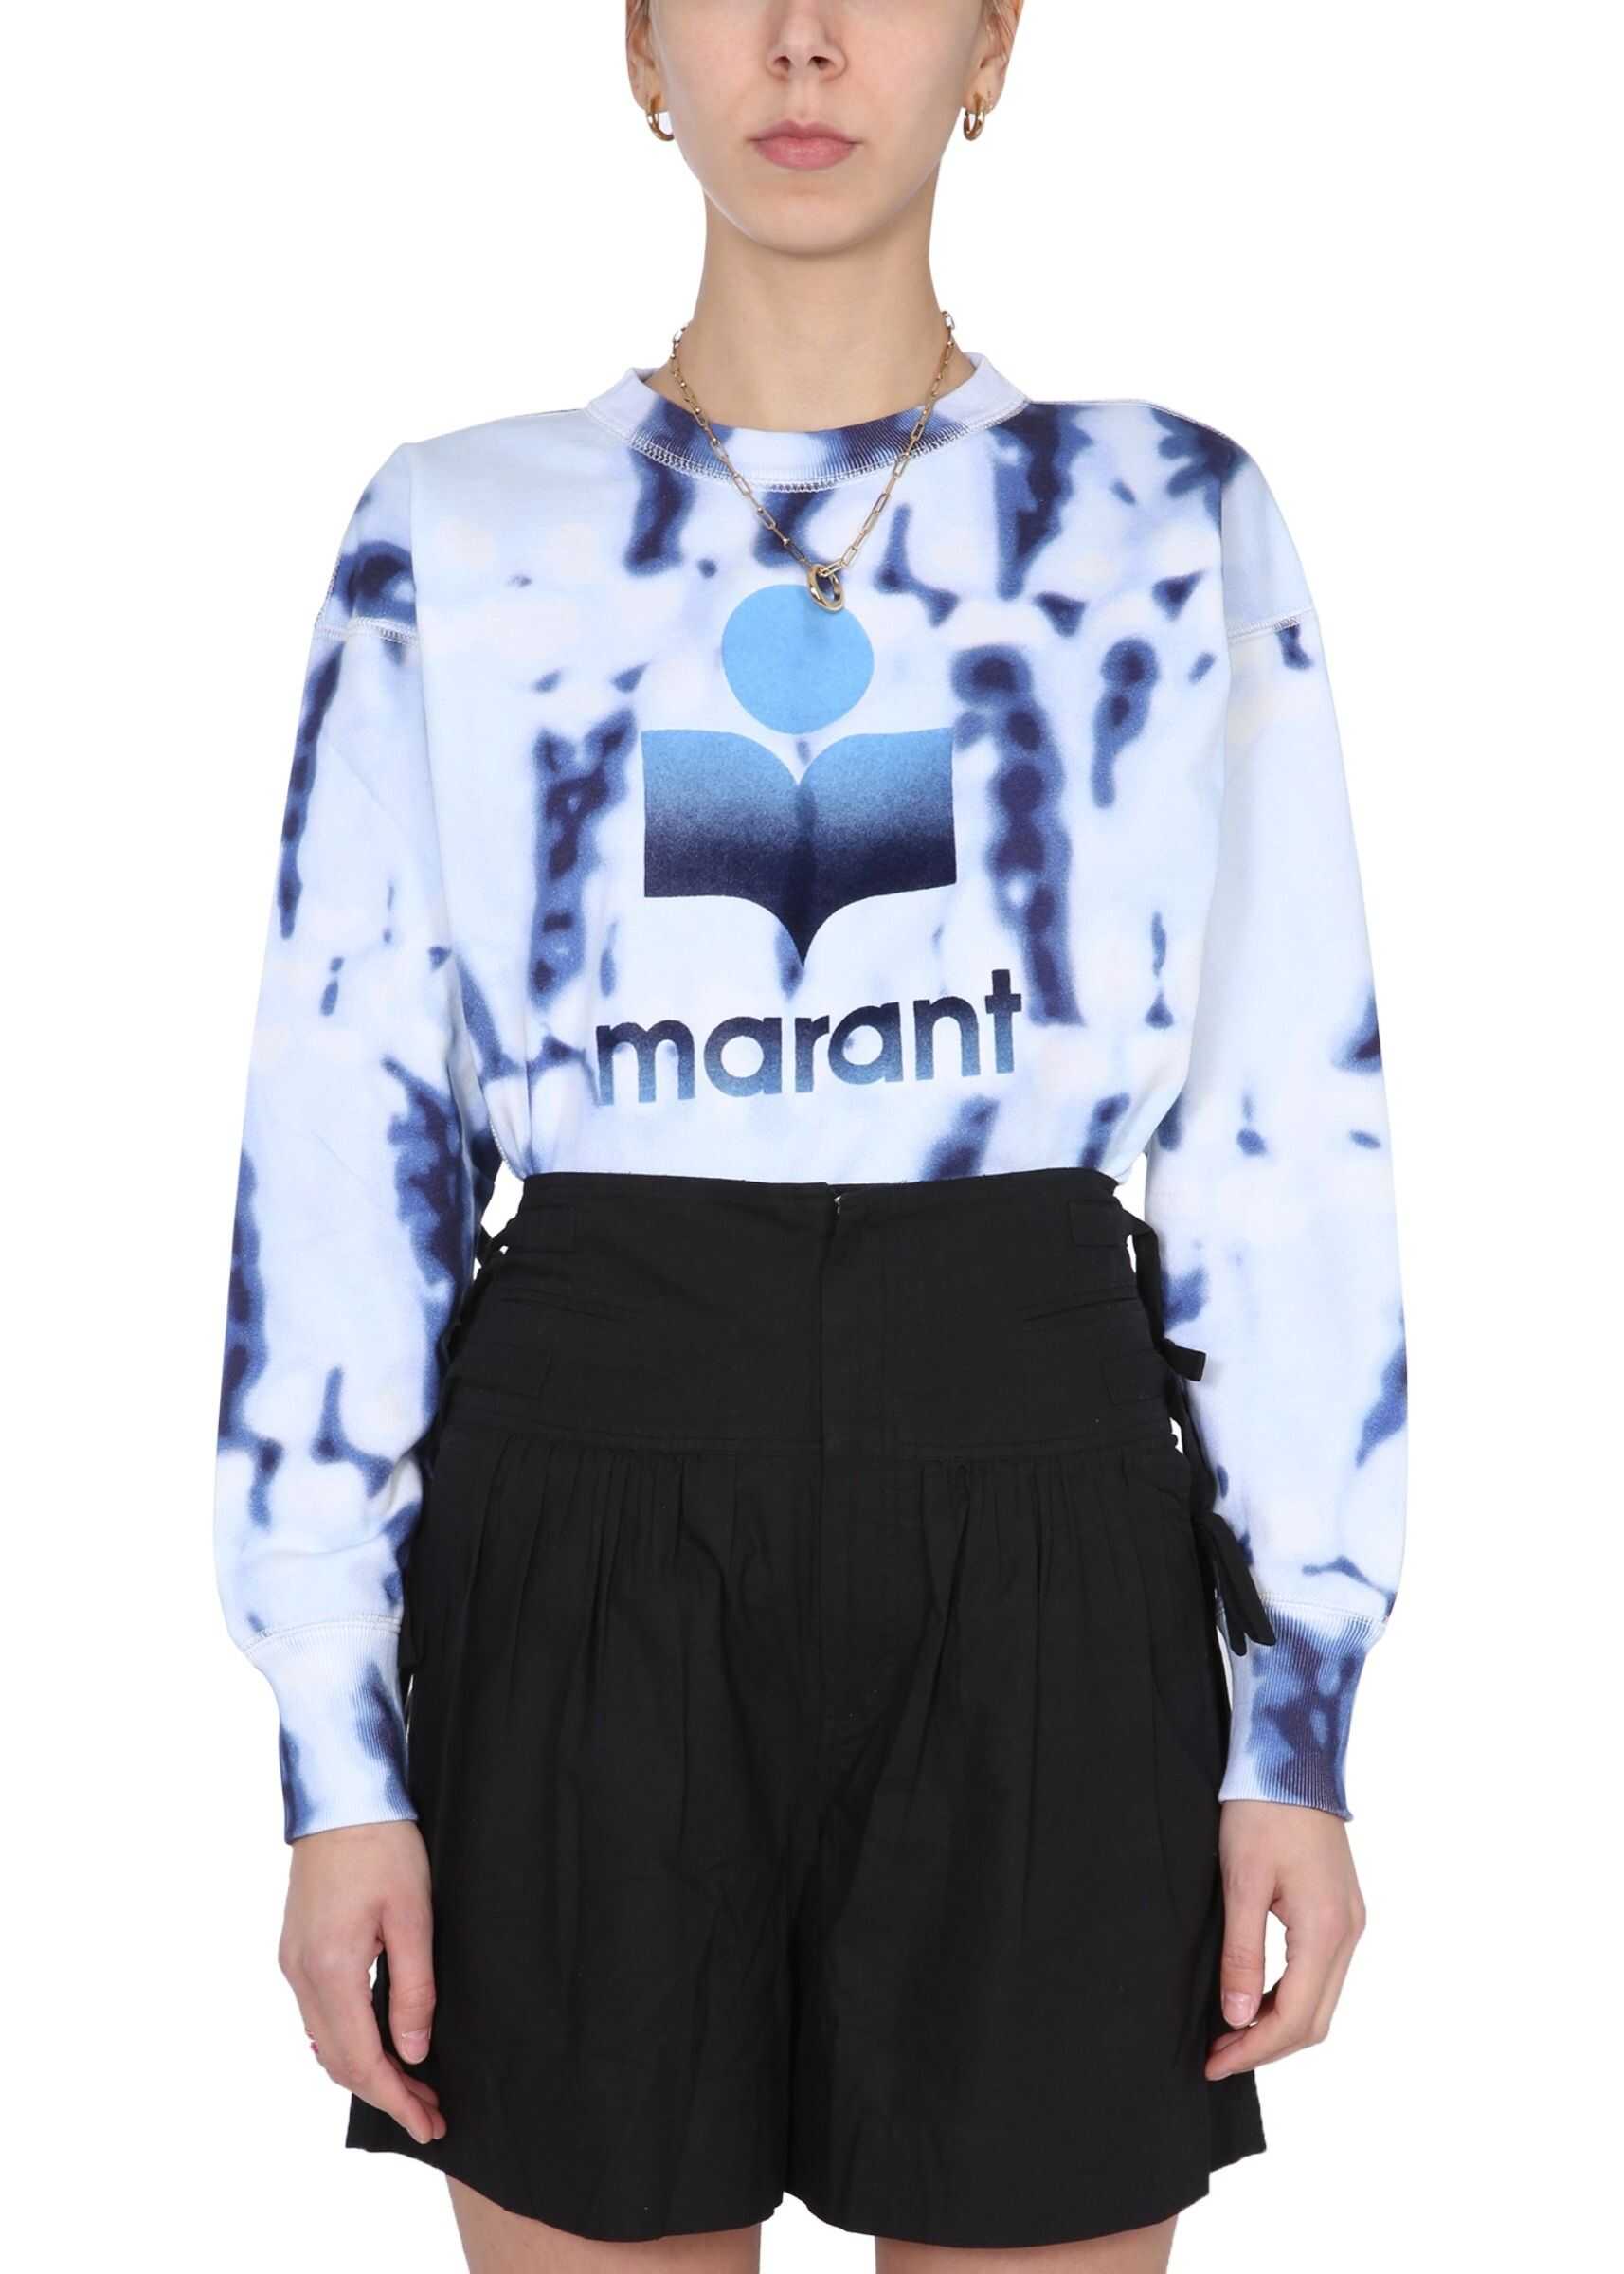 Isabel Marant "Mobyli" Sweatshirt SW0273_21P038E30BU BLUE